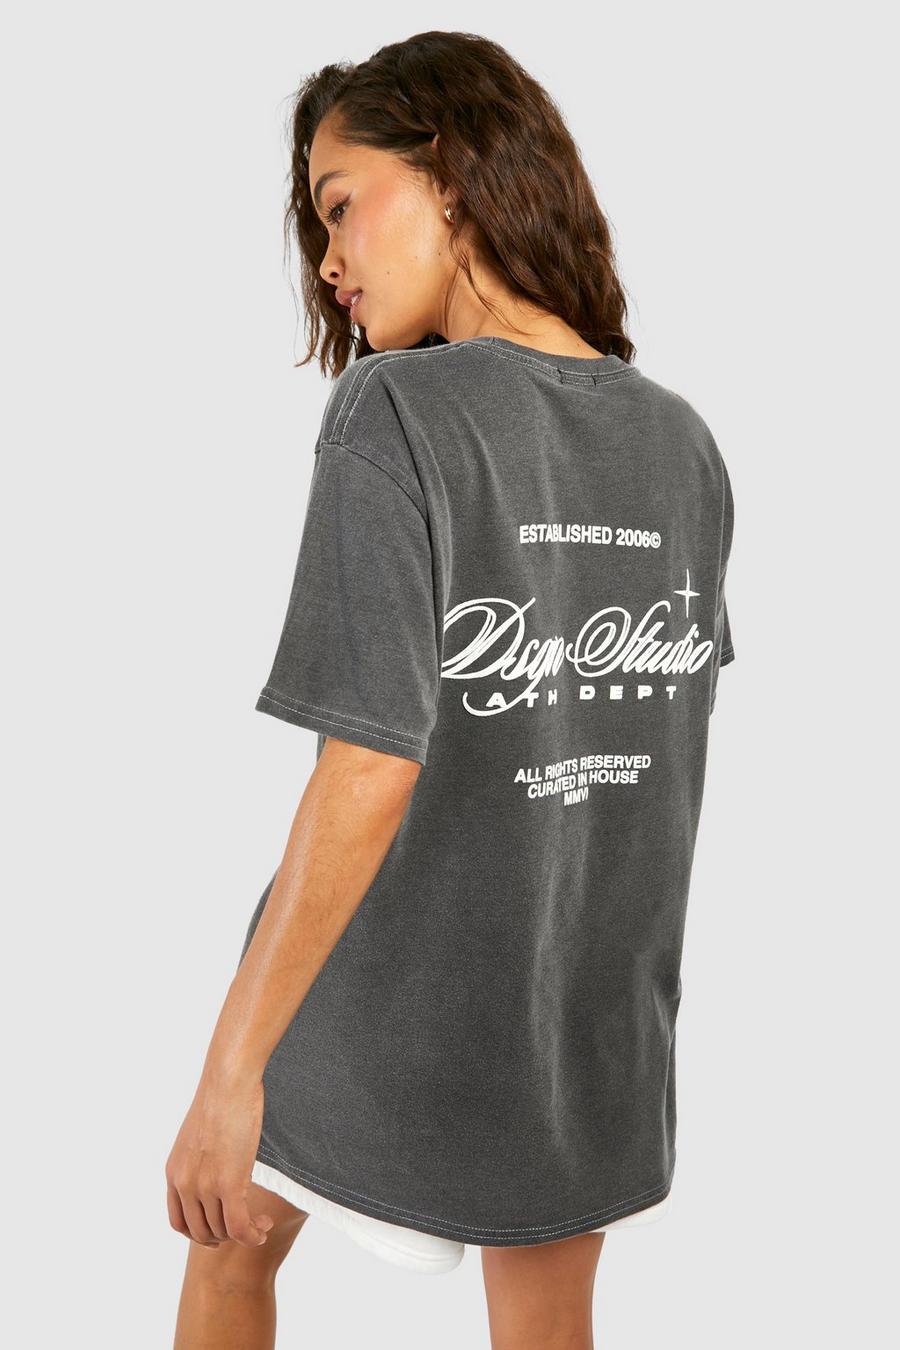 Oversize T-Shirt mit Dsgn Studio Print, Charcoal